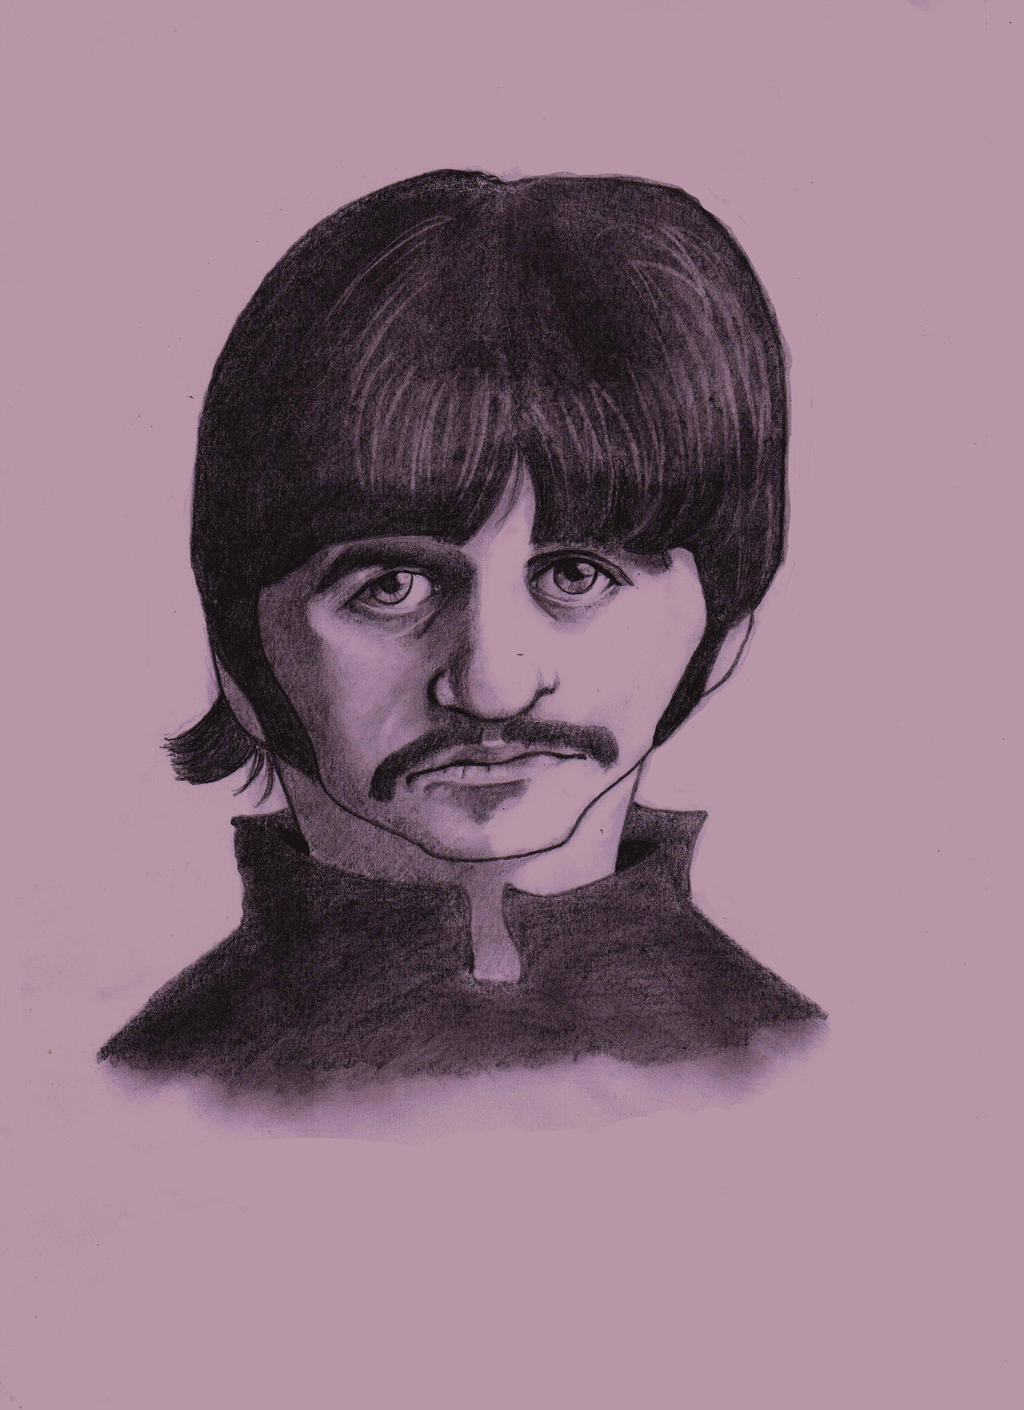 Ringo Starr by Silwywhisky on DeviantArt